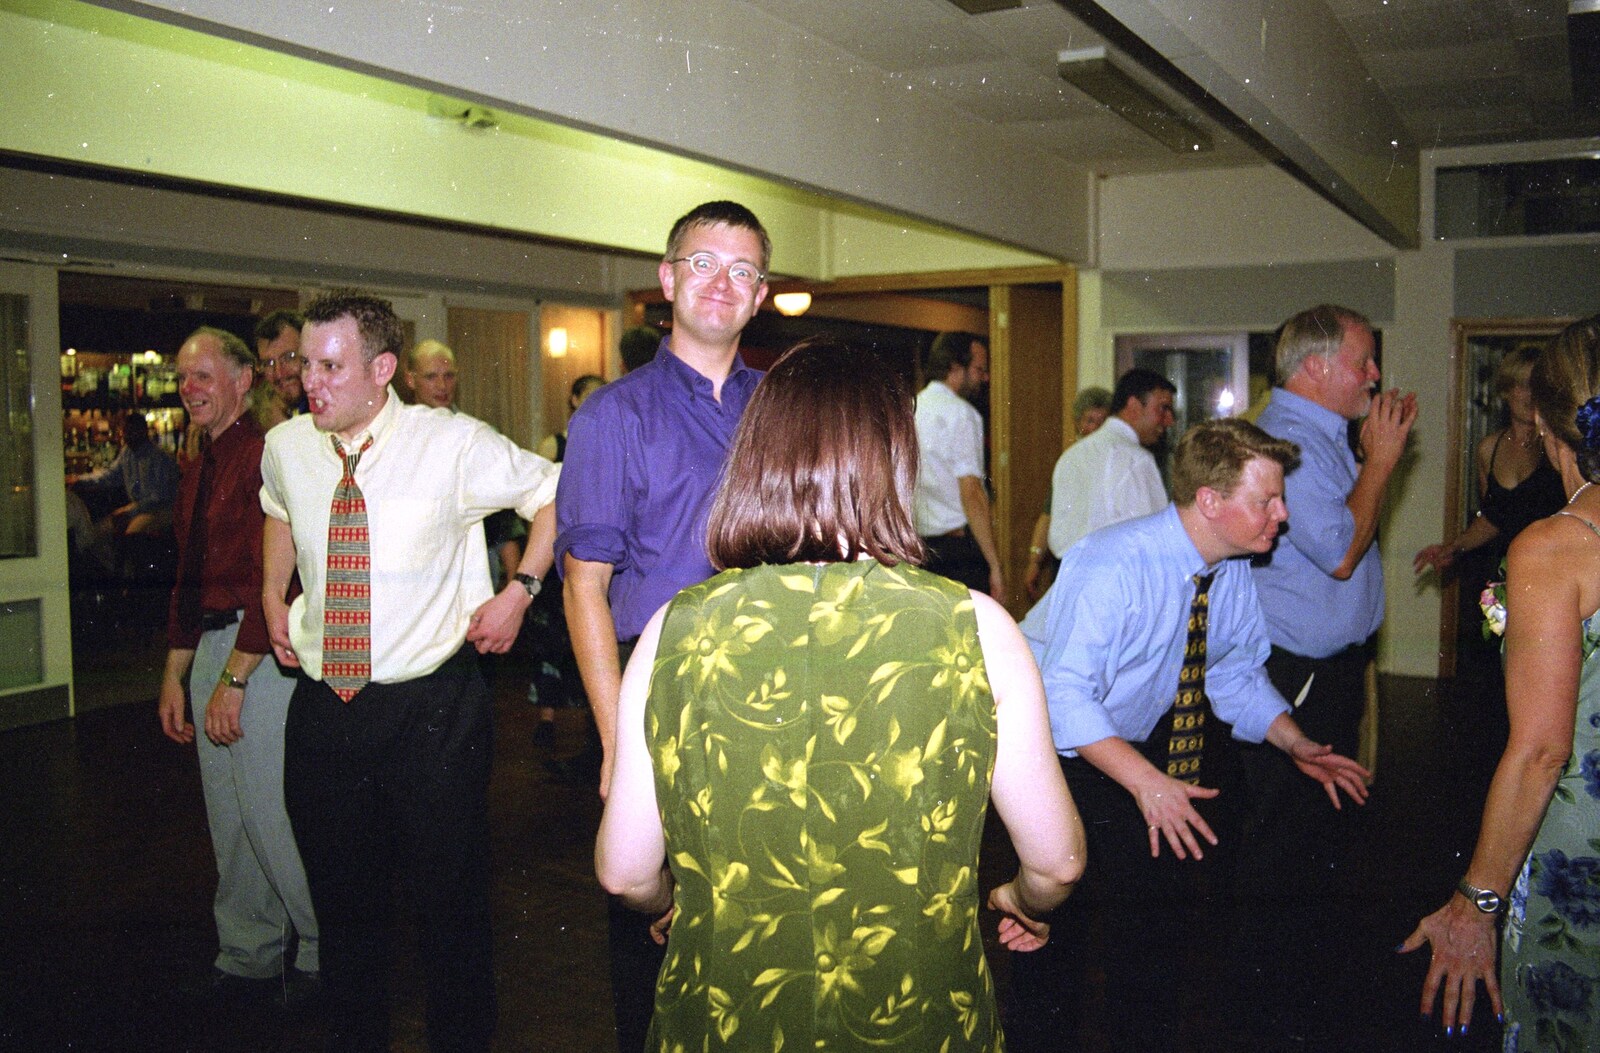 Nosher in the purple shirt from Joe and Lesley's CISU Wedding, Ipswich, Suffolk - 30th July 1998